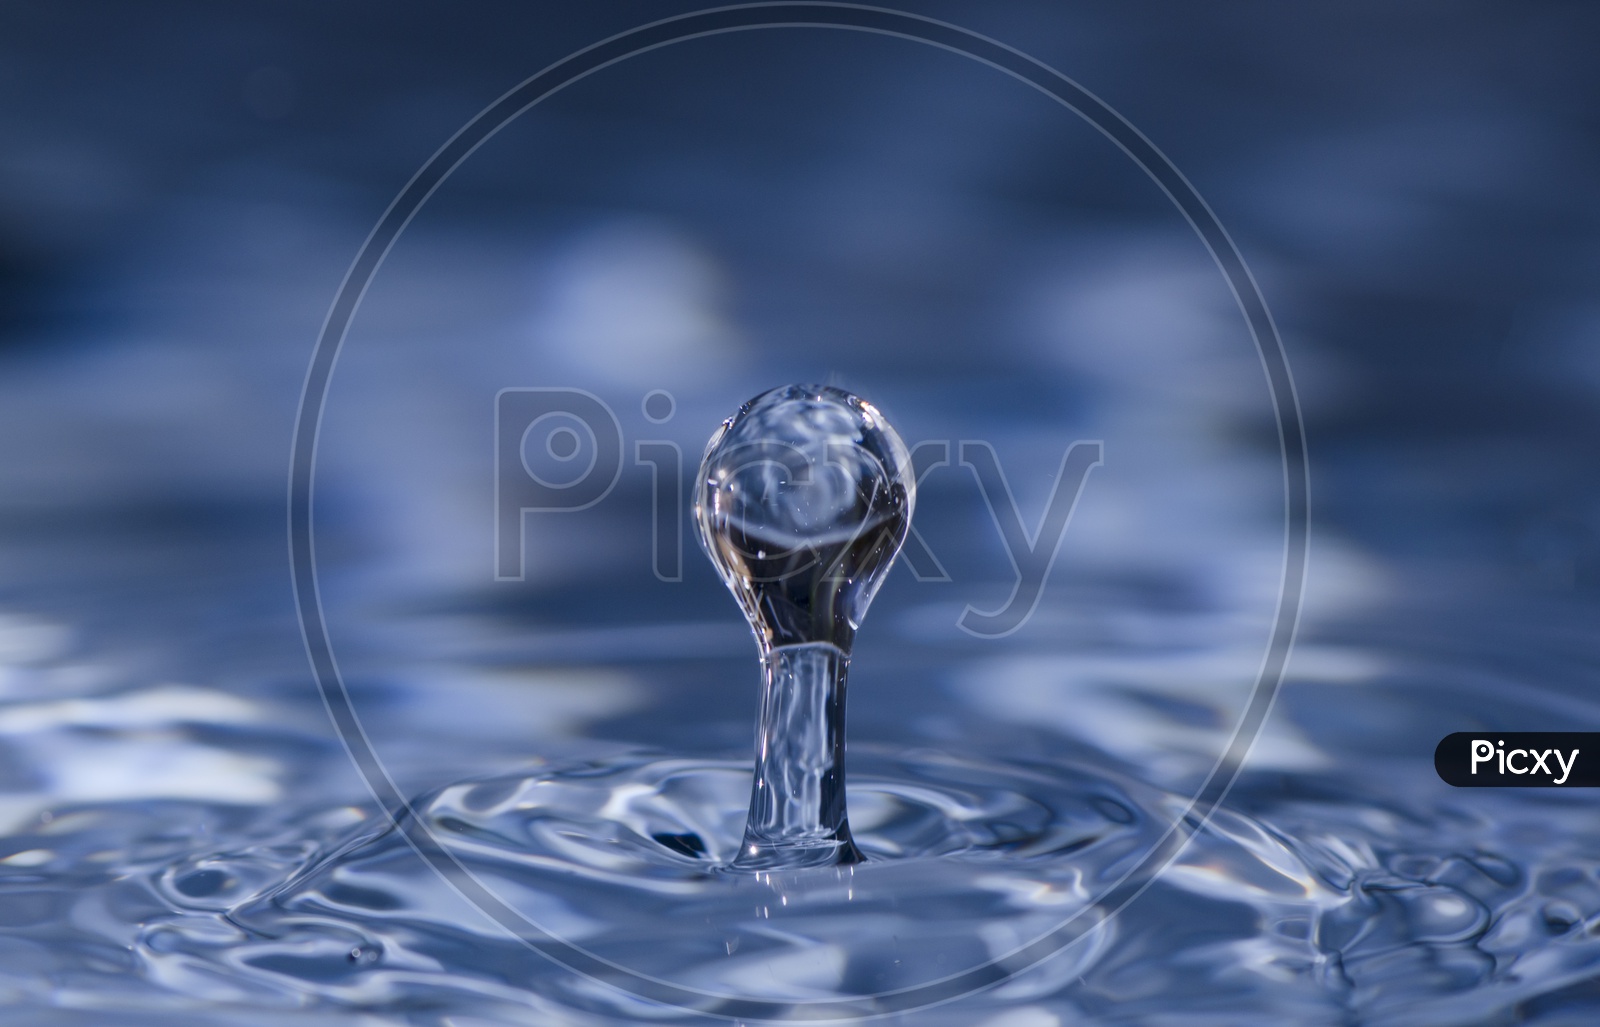 Splash of water crown on blue surface